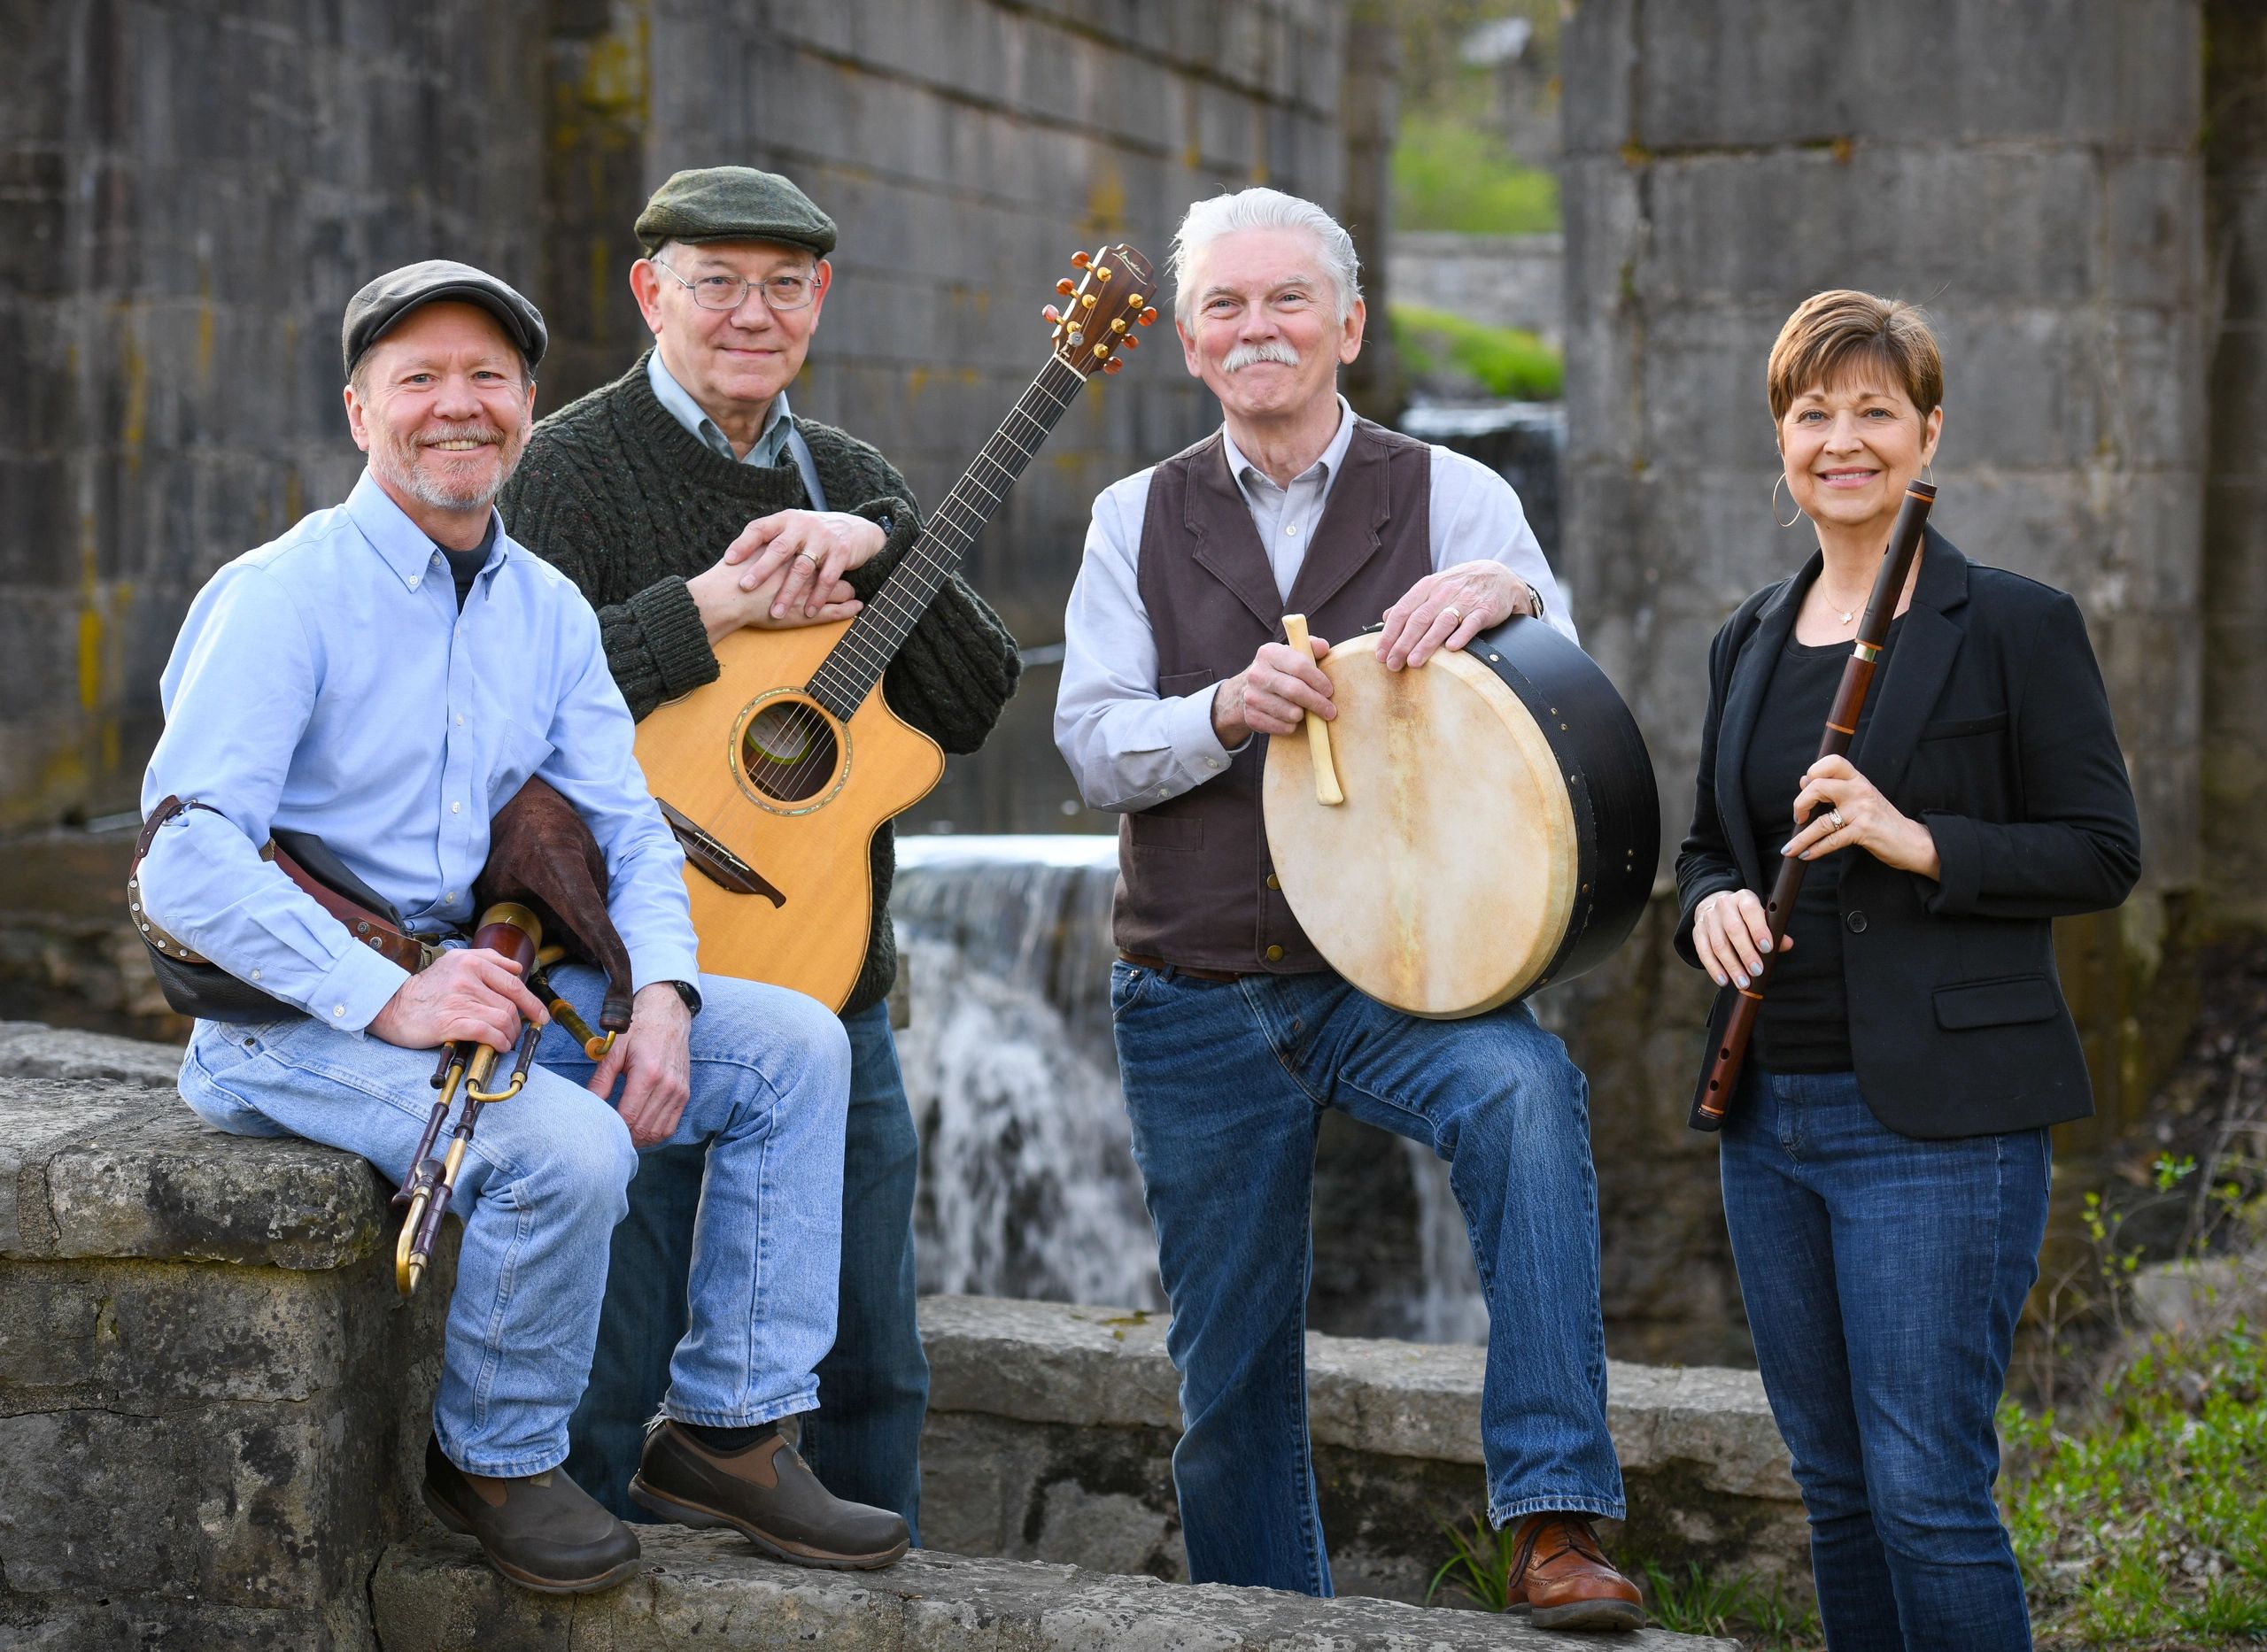 Toraigh - Traditional Irish Music, Live Music Performance